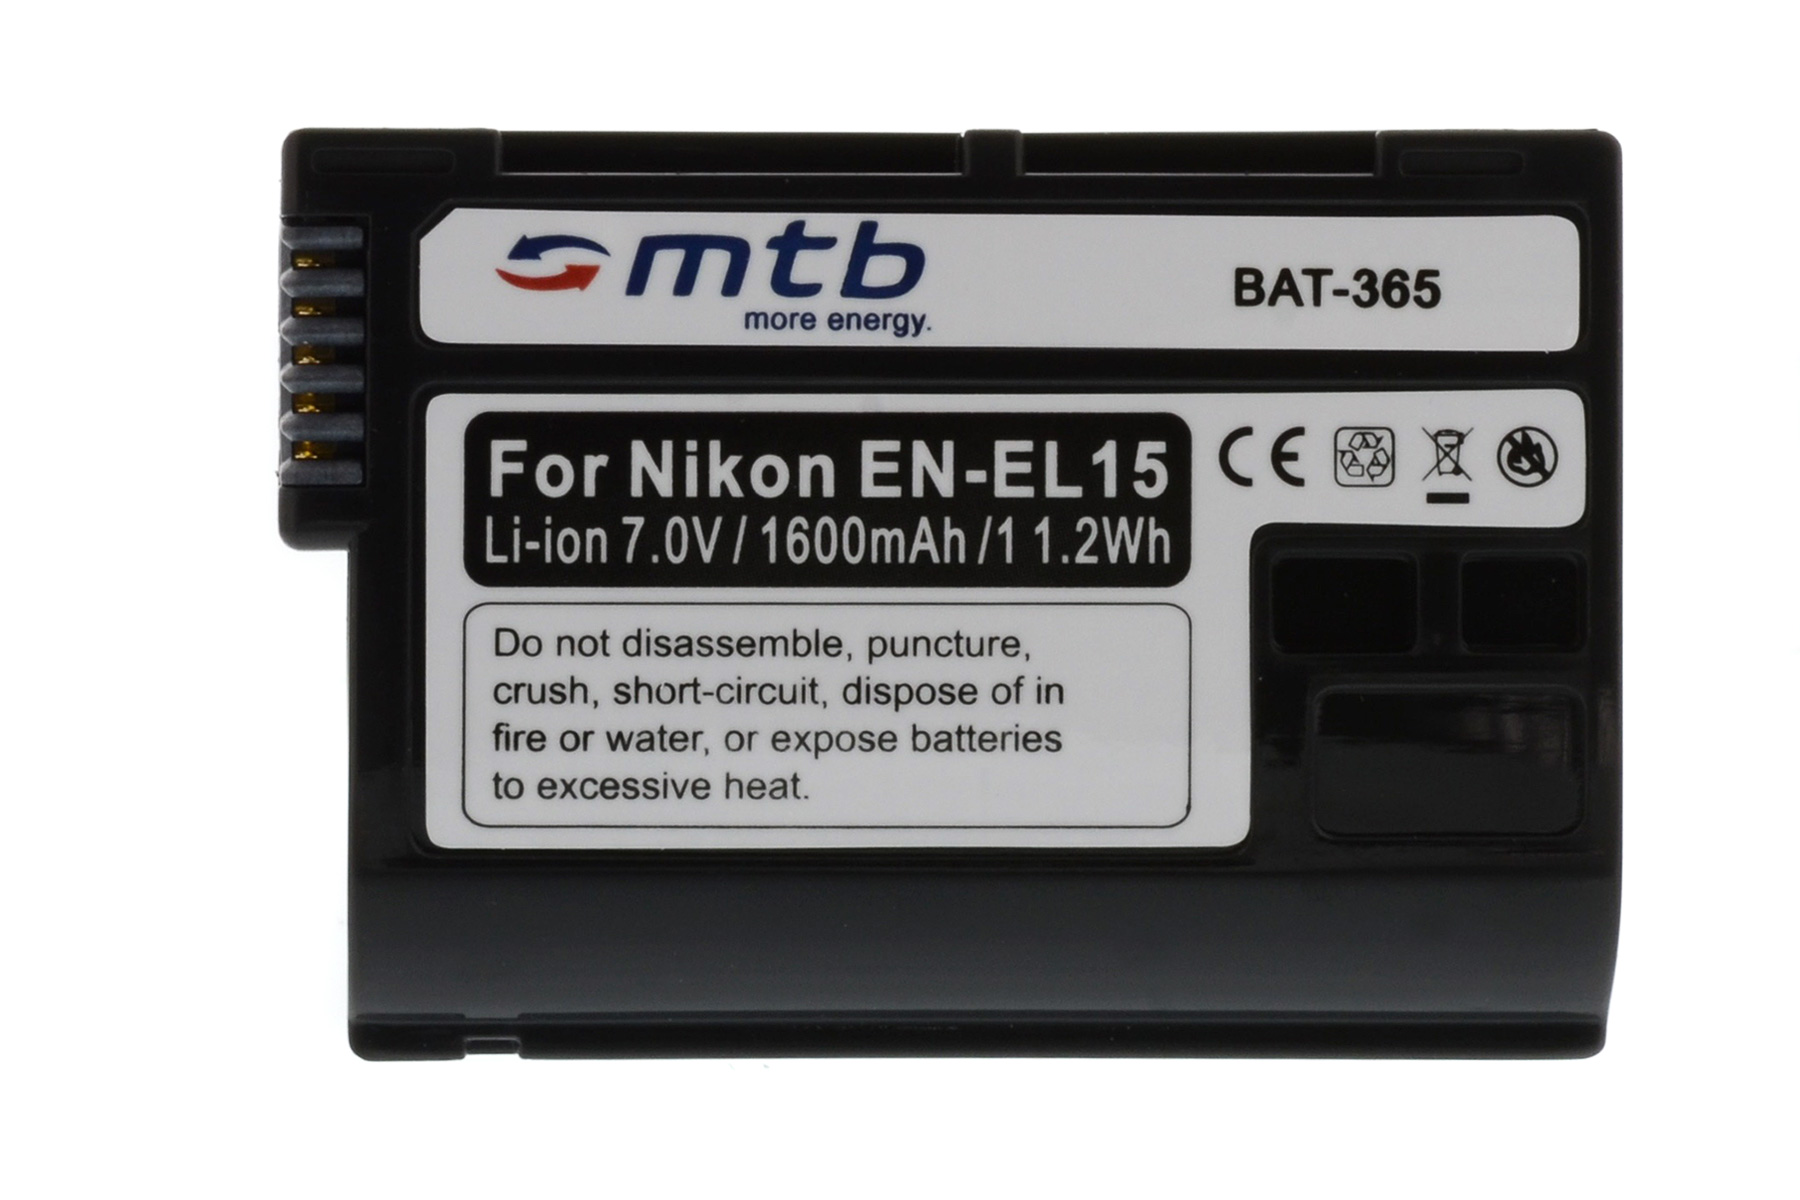 MTB MORE ENERGY 2x Li-Ion, EN-EL15 Akku, BAT-365 1600 mAh